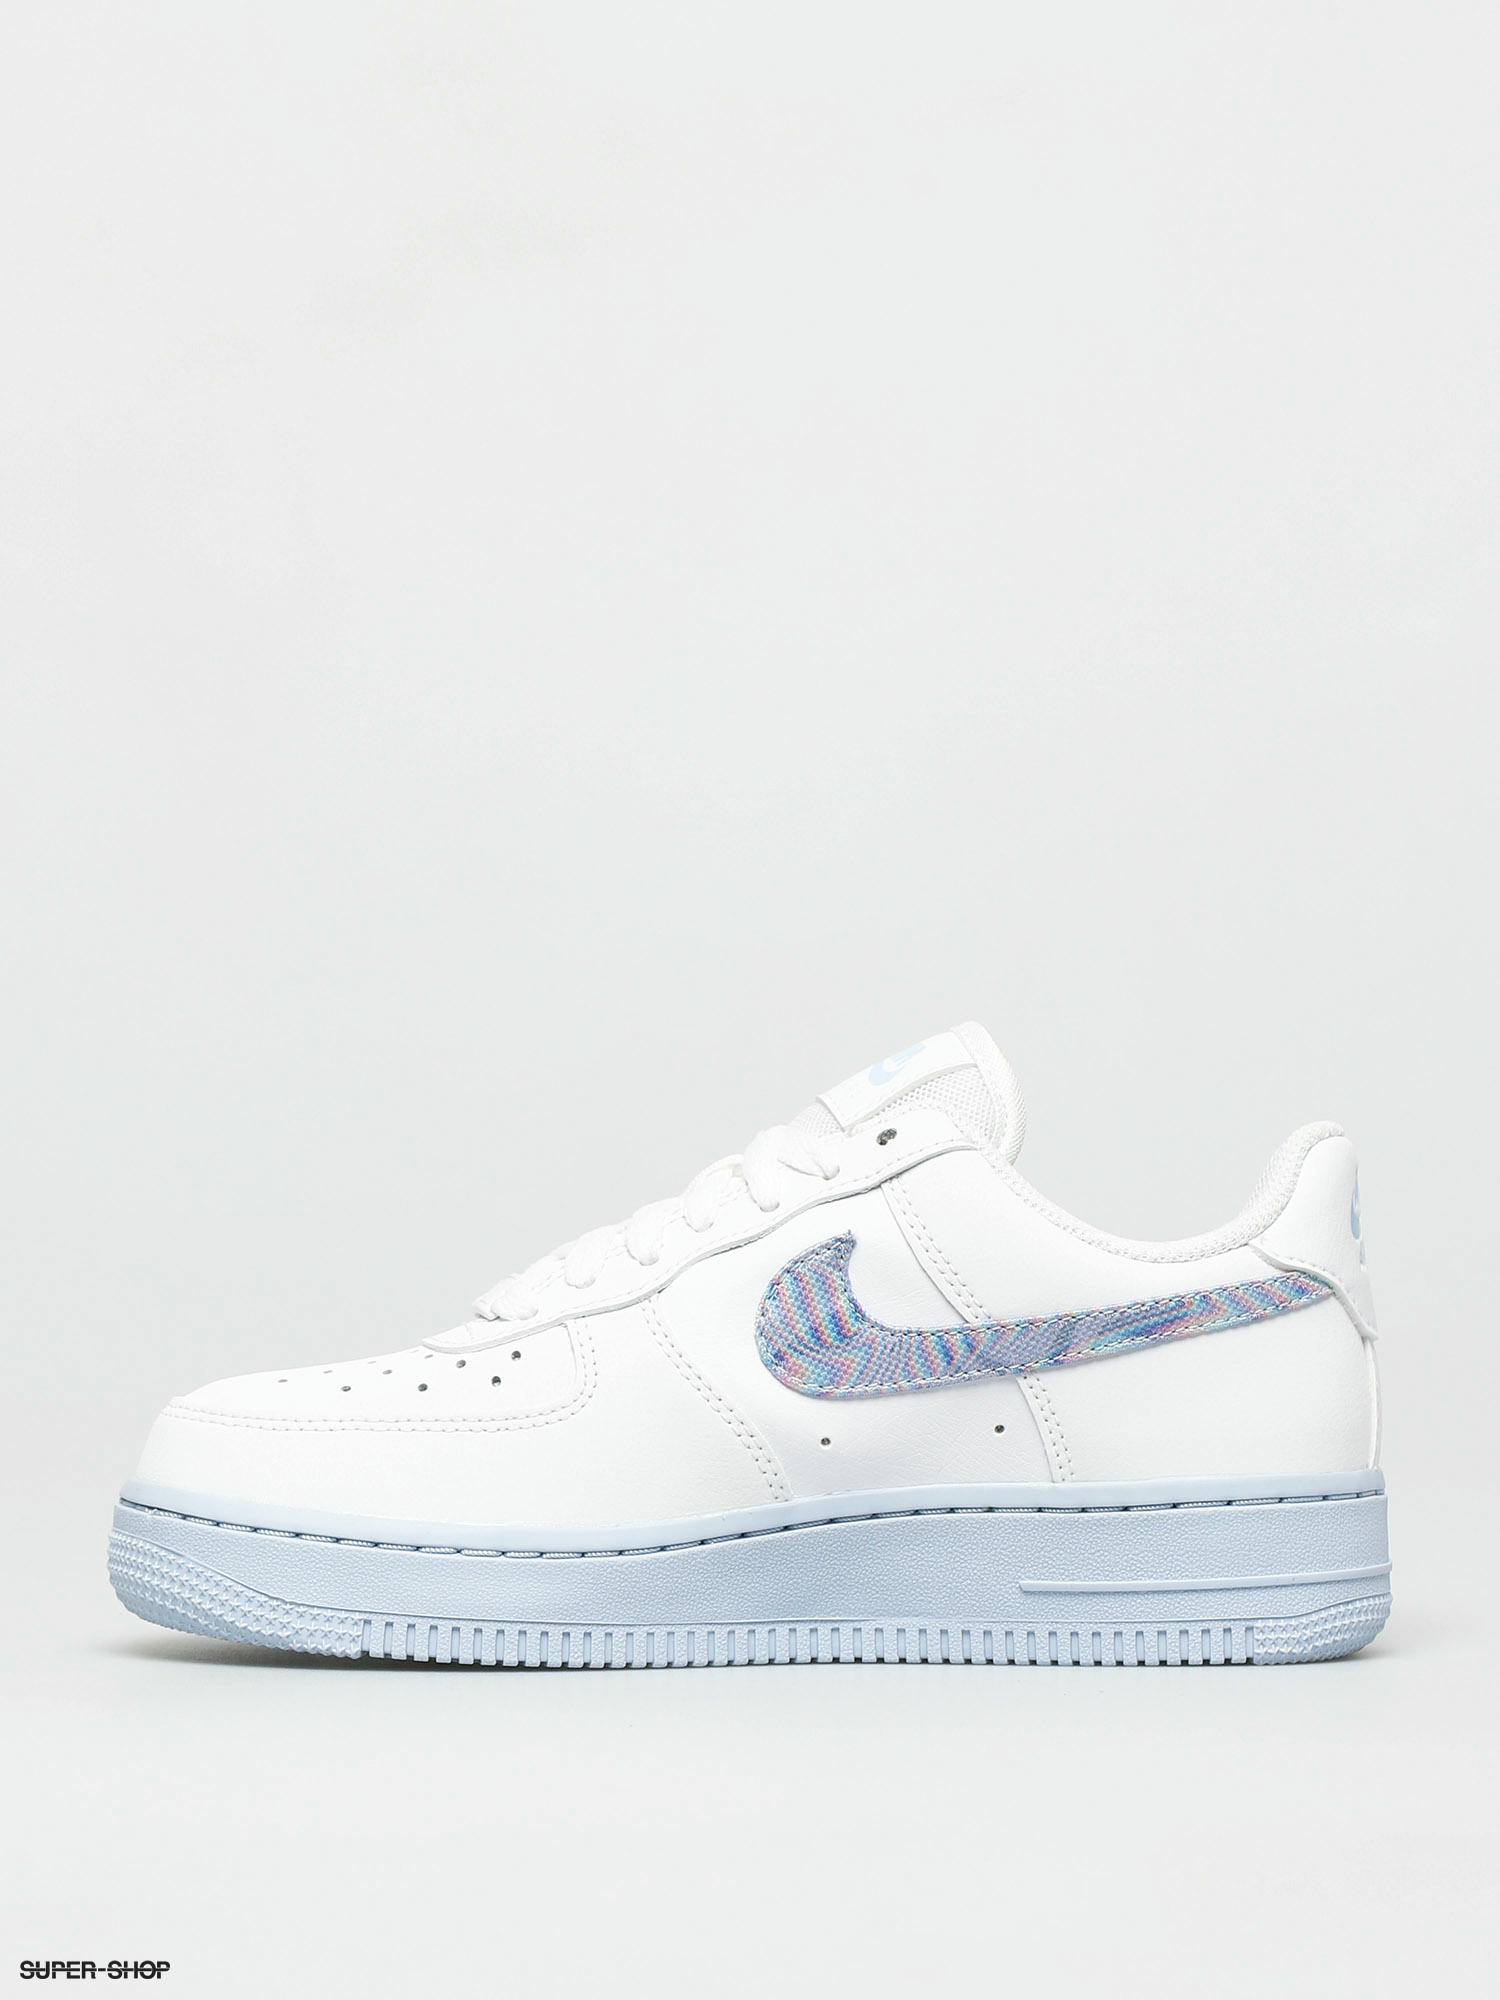 Nike Air Force 1 07 Shoes Wmn (white/hydrogen blue laser blue)